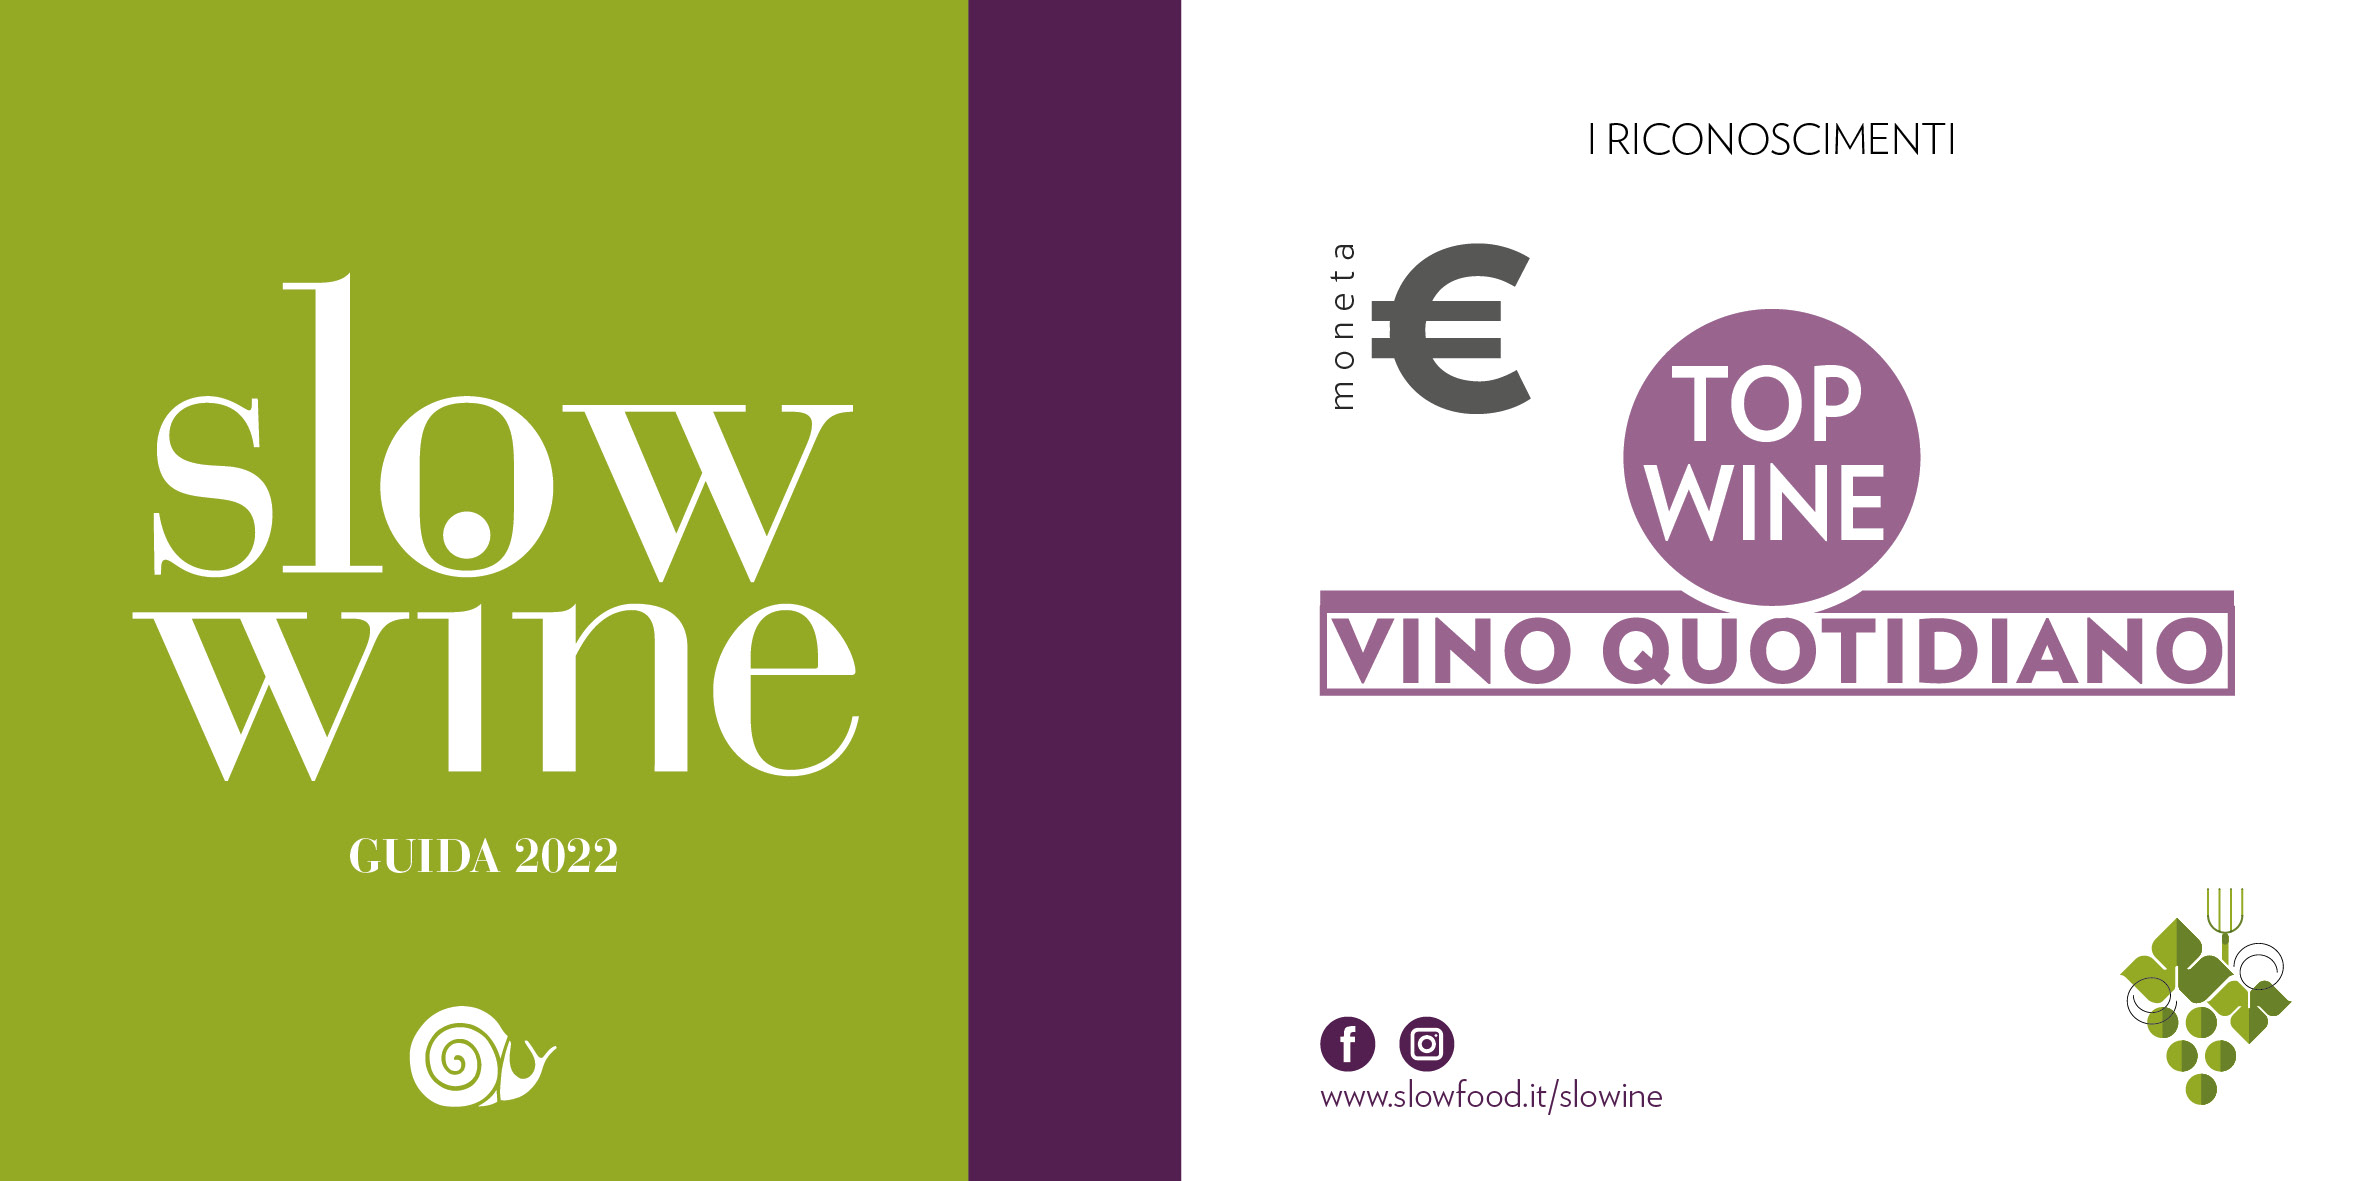 TOP WINE VINO quotidiano RUTILIA 2018 Slow Wine 2022 Moneta Top Quotidiano 2